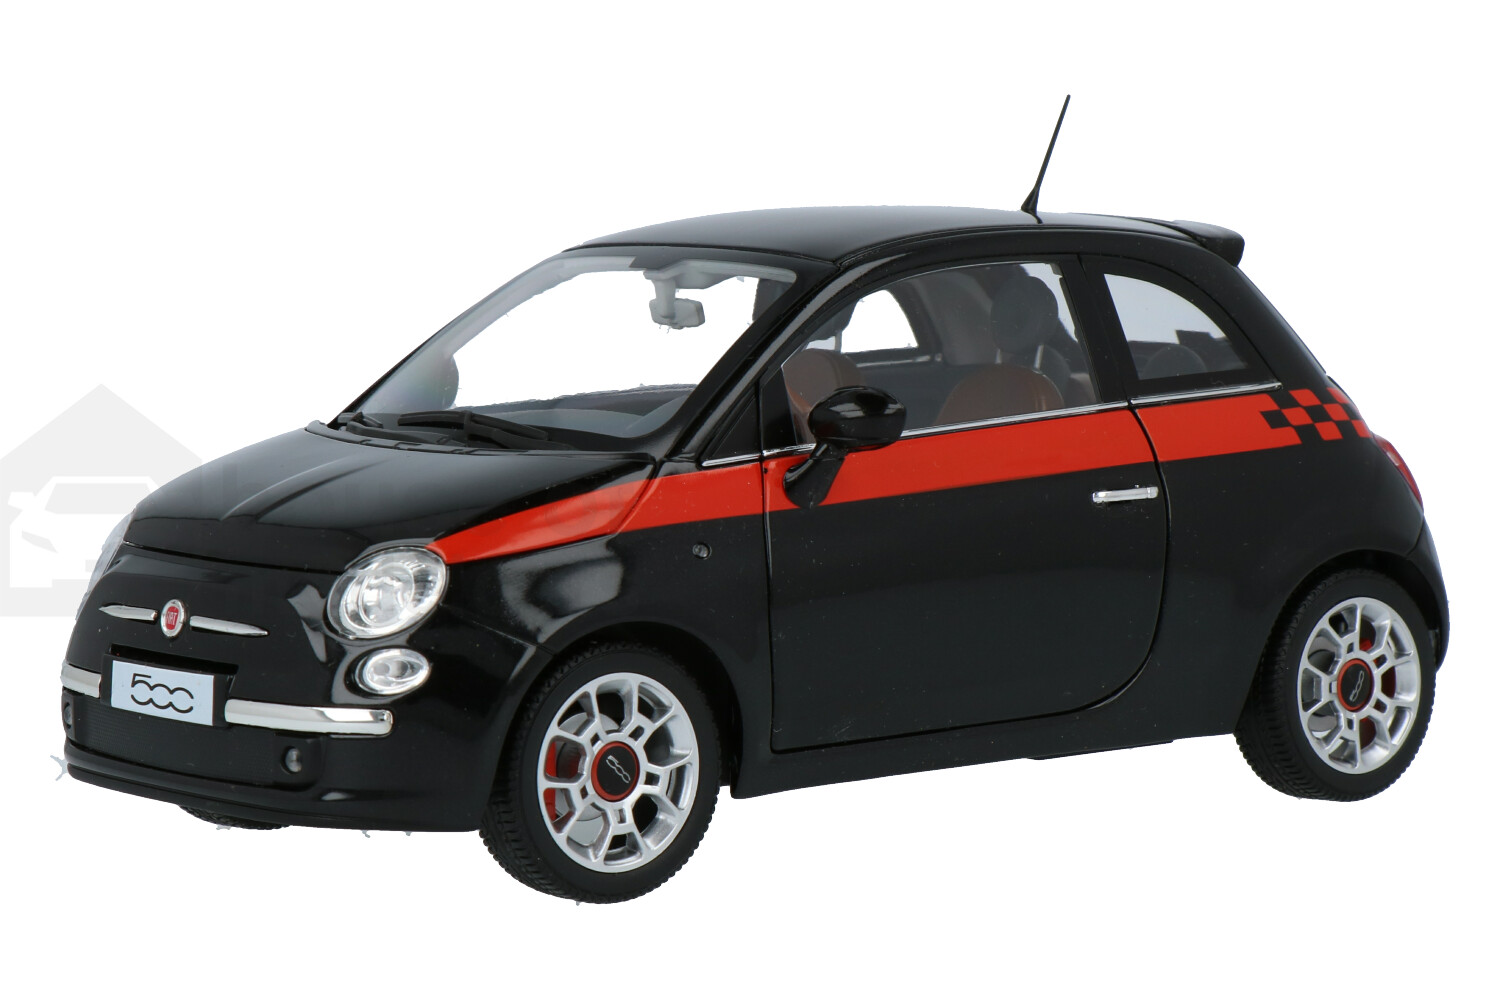 Fiat-500-Nuova-187730_13153551091877301-NorevFiat-500-Nuova-187730_Houseofmodelcars_.jpg